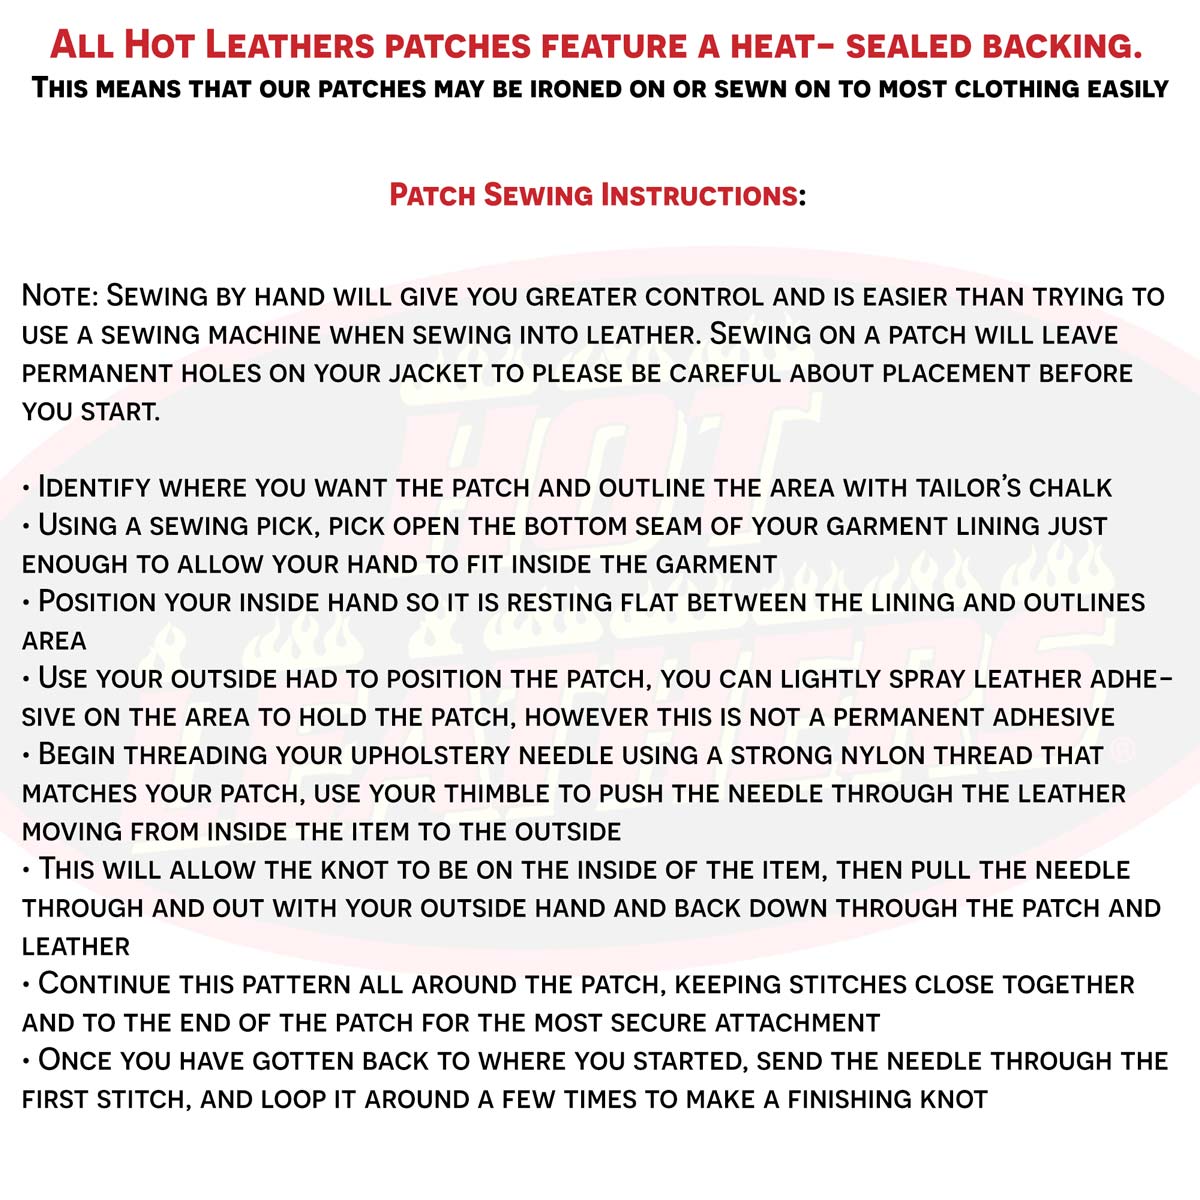 Hot Leathers PPL9002 Asshole 4" x 2" Patch